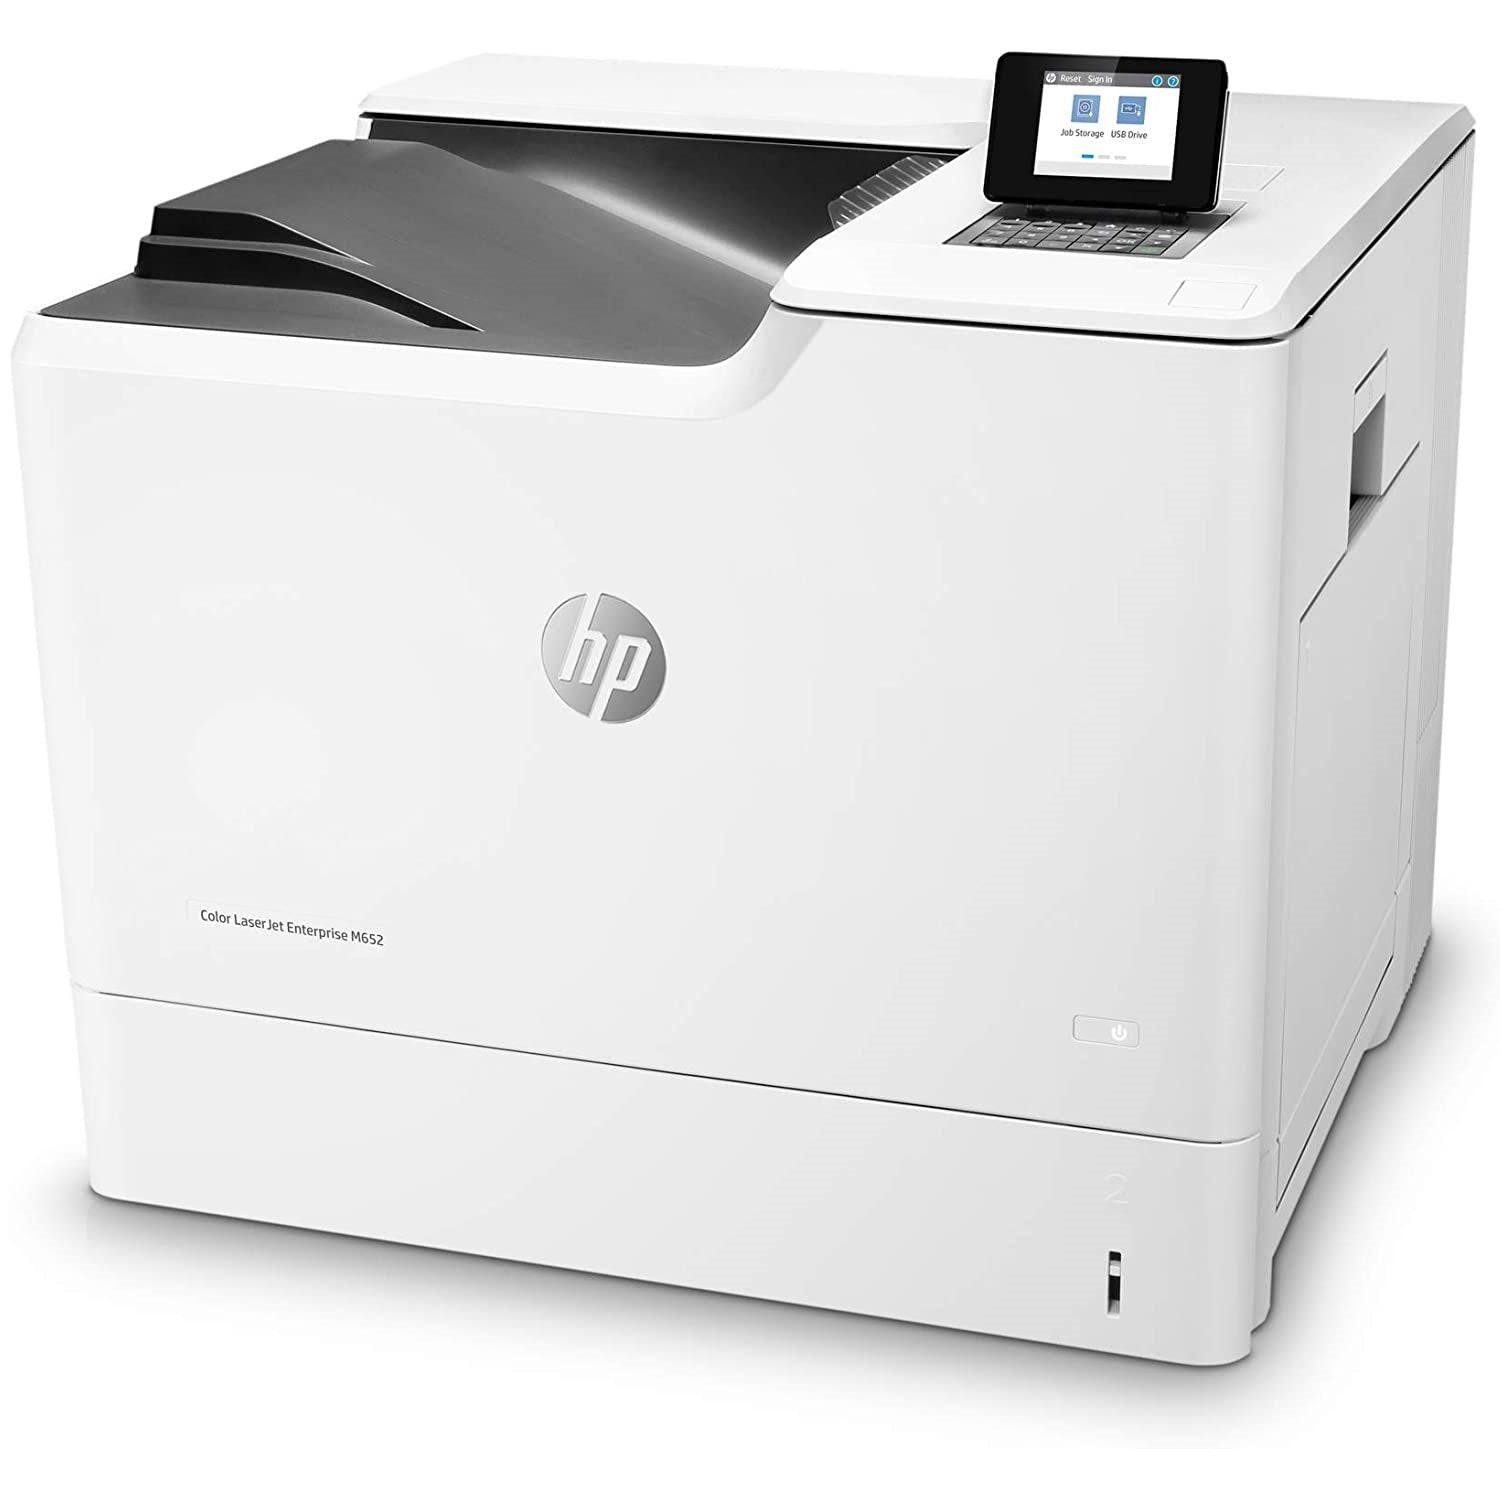 Absolute Toner REPO HP Color LaserJet Enterprise M652dn Color Laser printer Duplex, Network, Fast & economical For Office Use Showroom Color Copiers